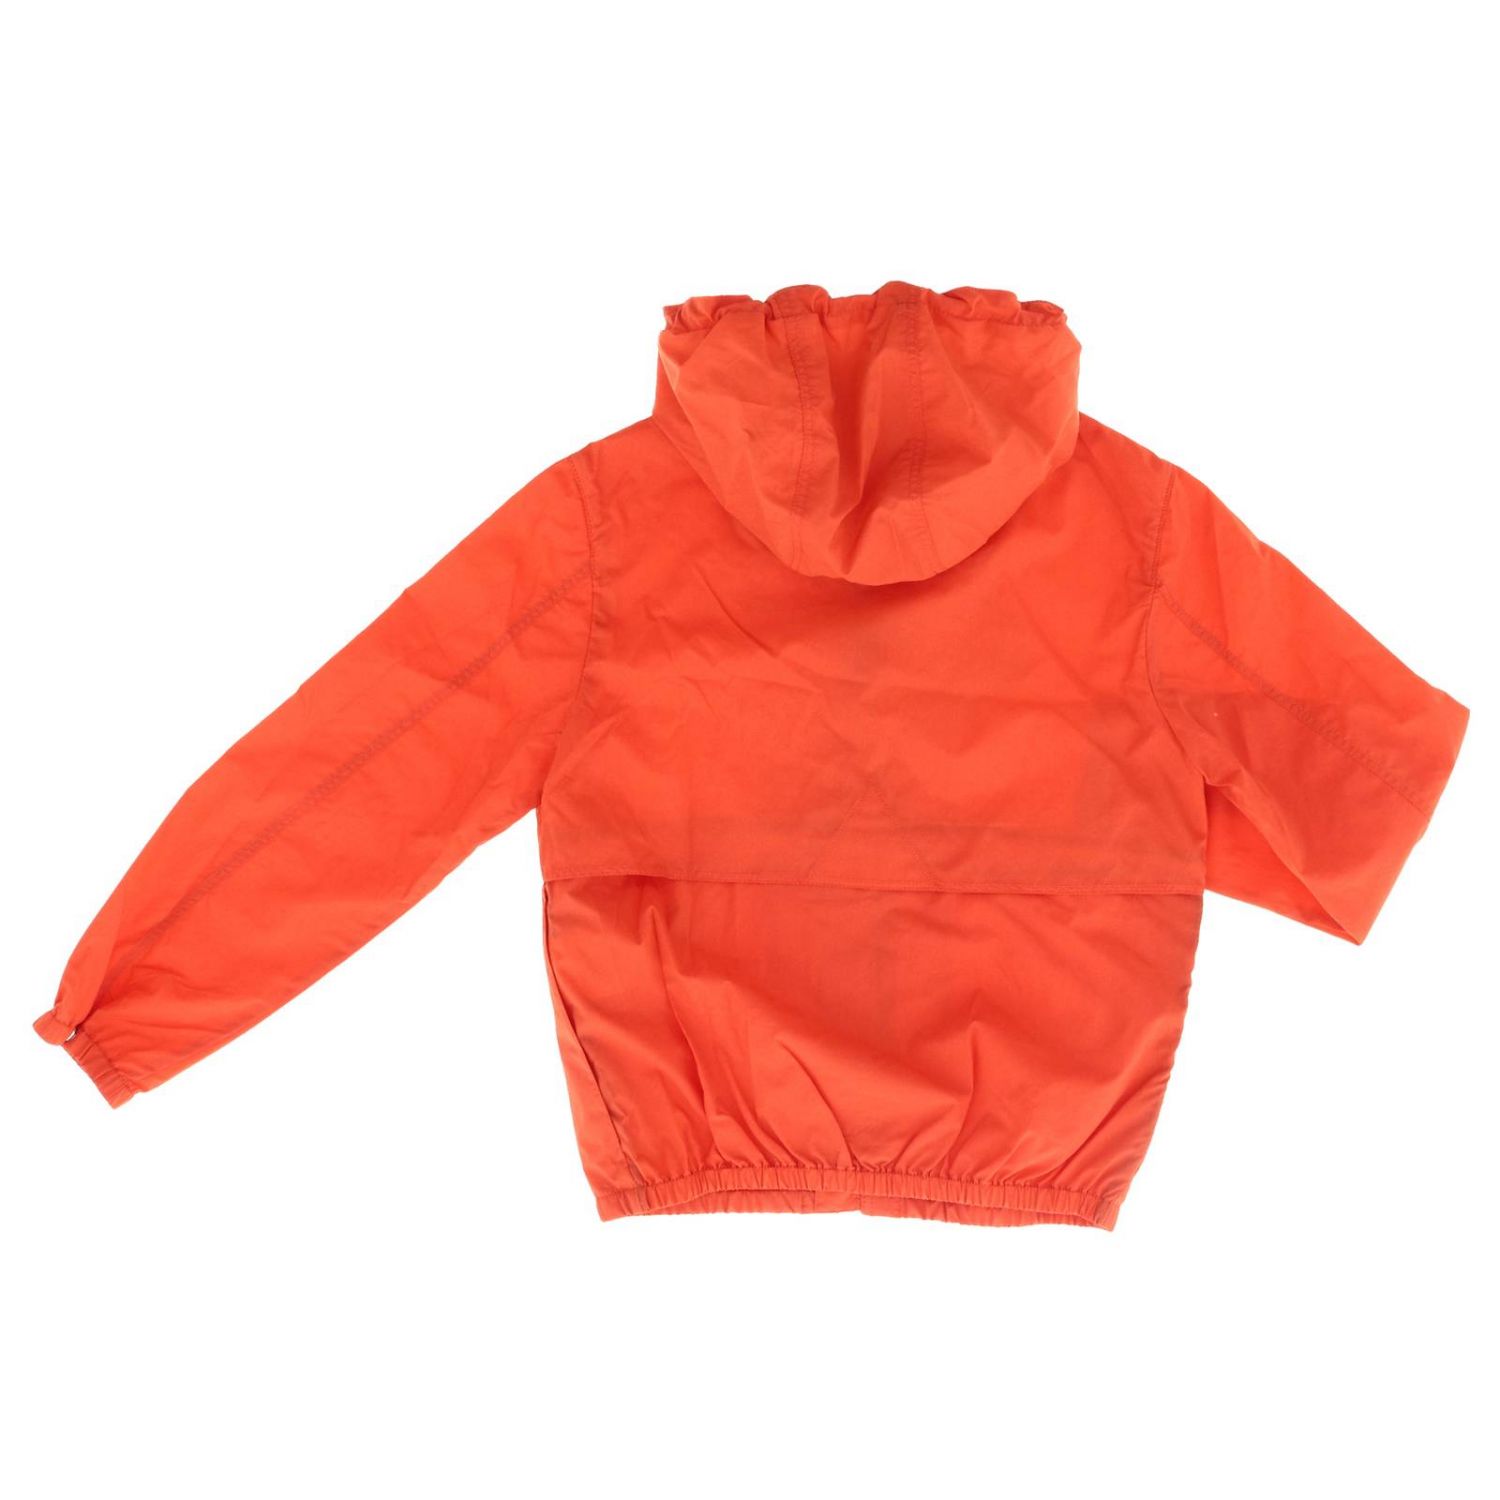 burberry jacket kids orange